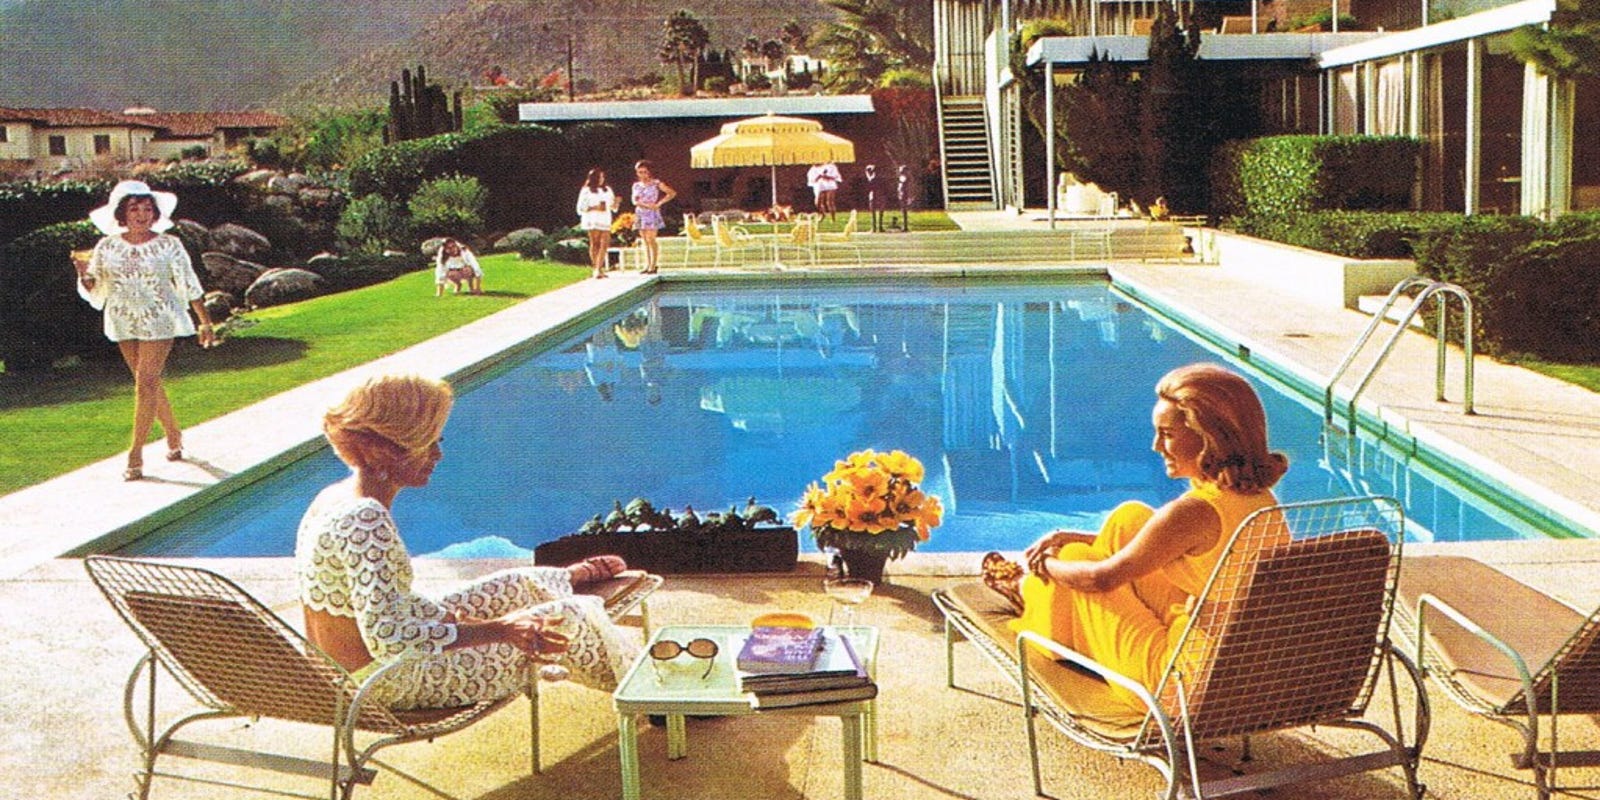 Nelda Linsks Love Of Palm Springs And The Singular Appeal Of Slim 